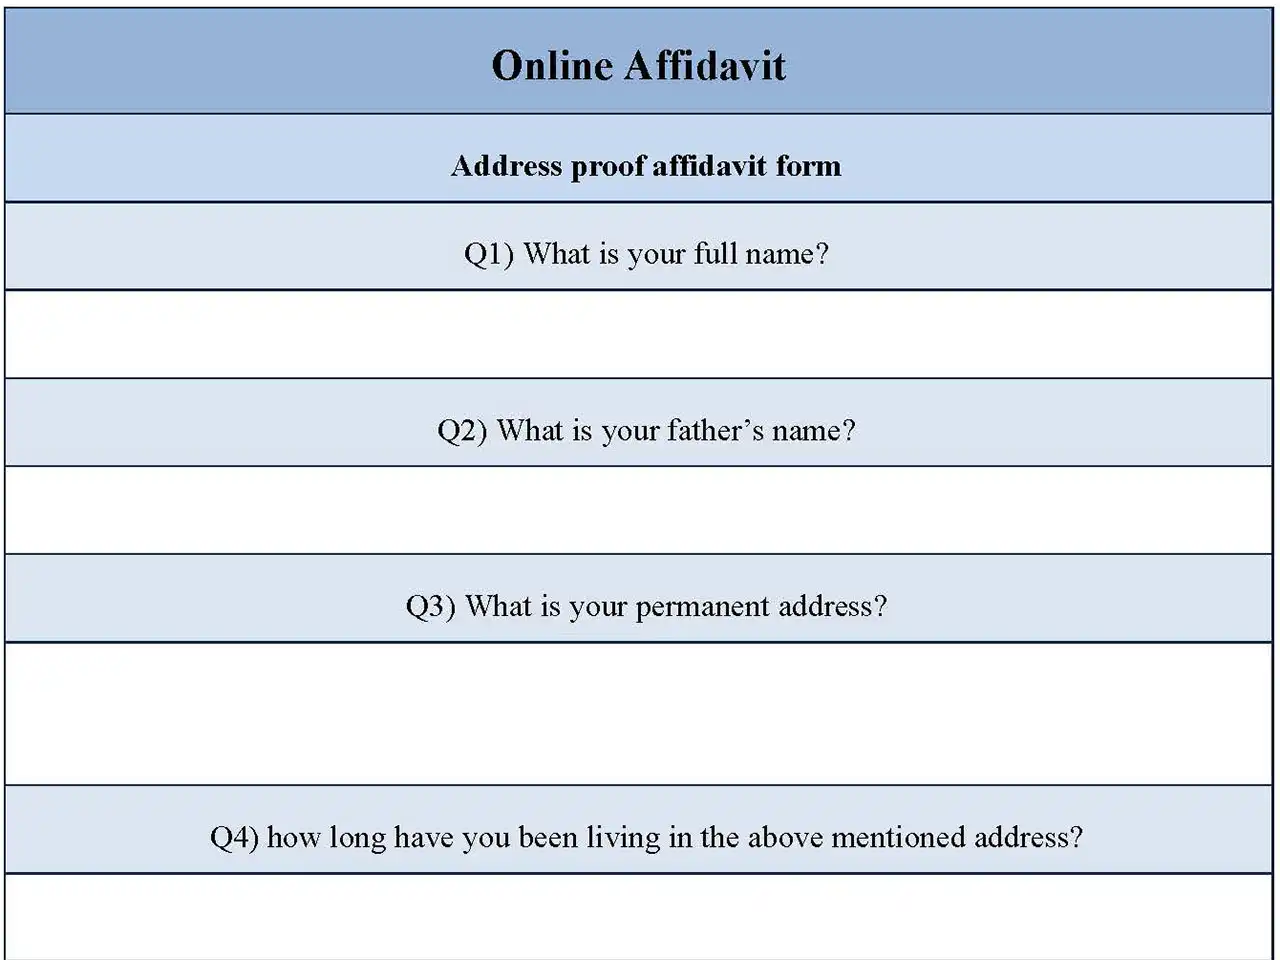 Online Affidavit Form